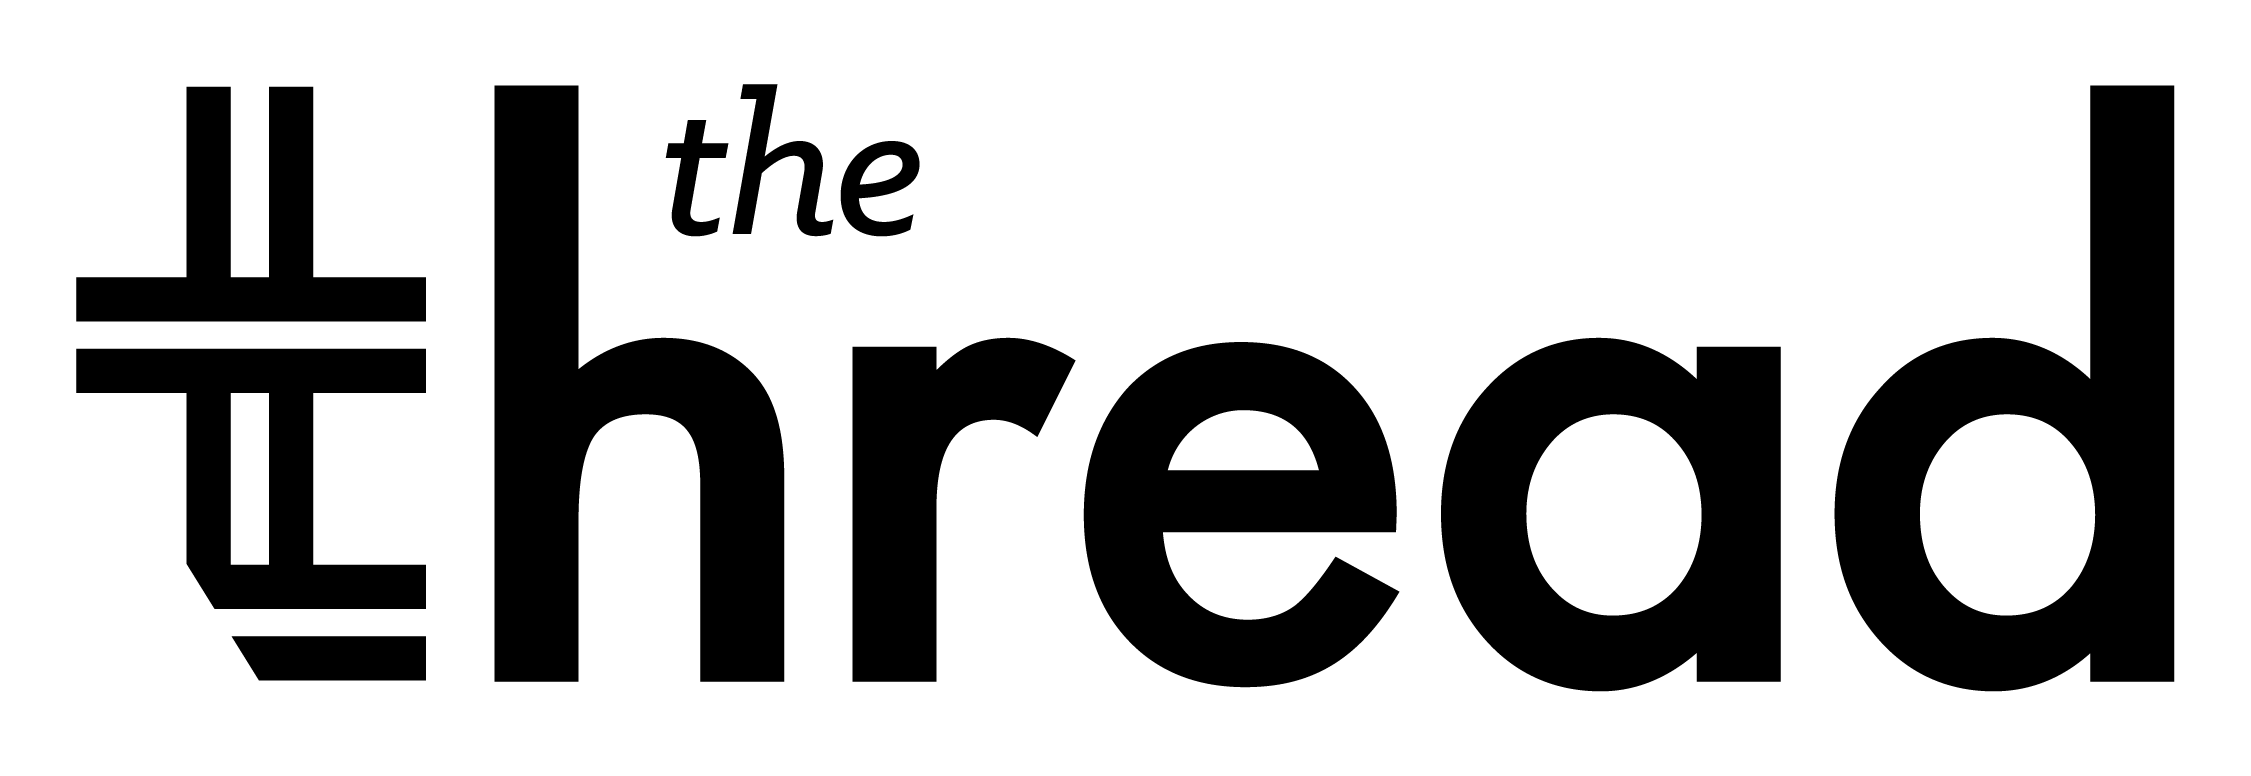 TheThread_Logo_Black.png